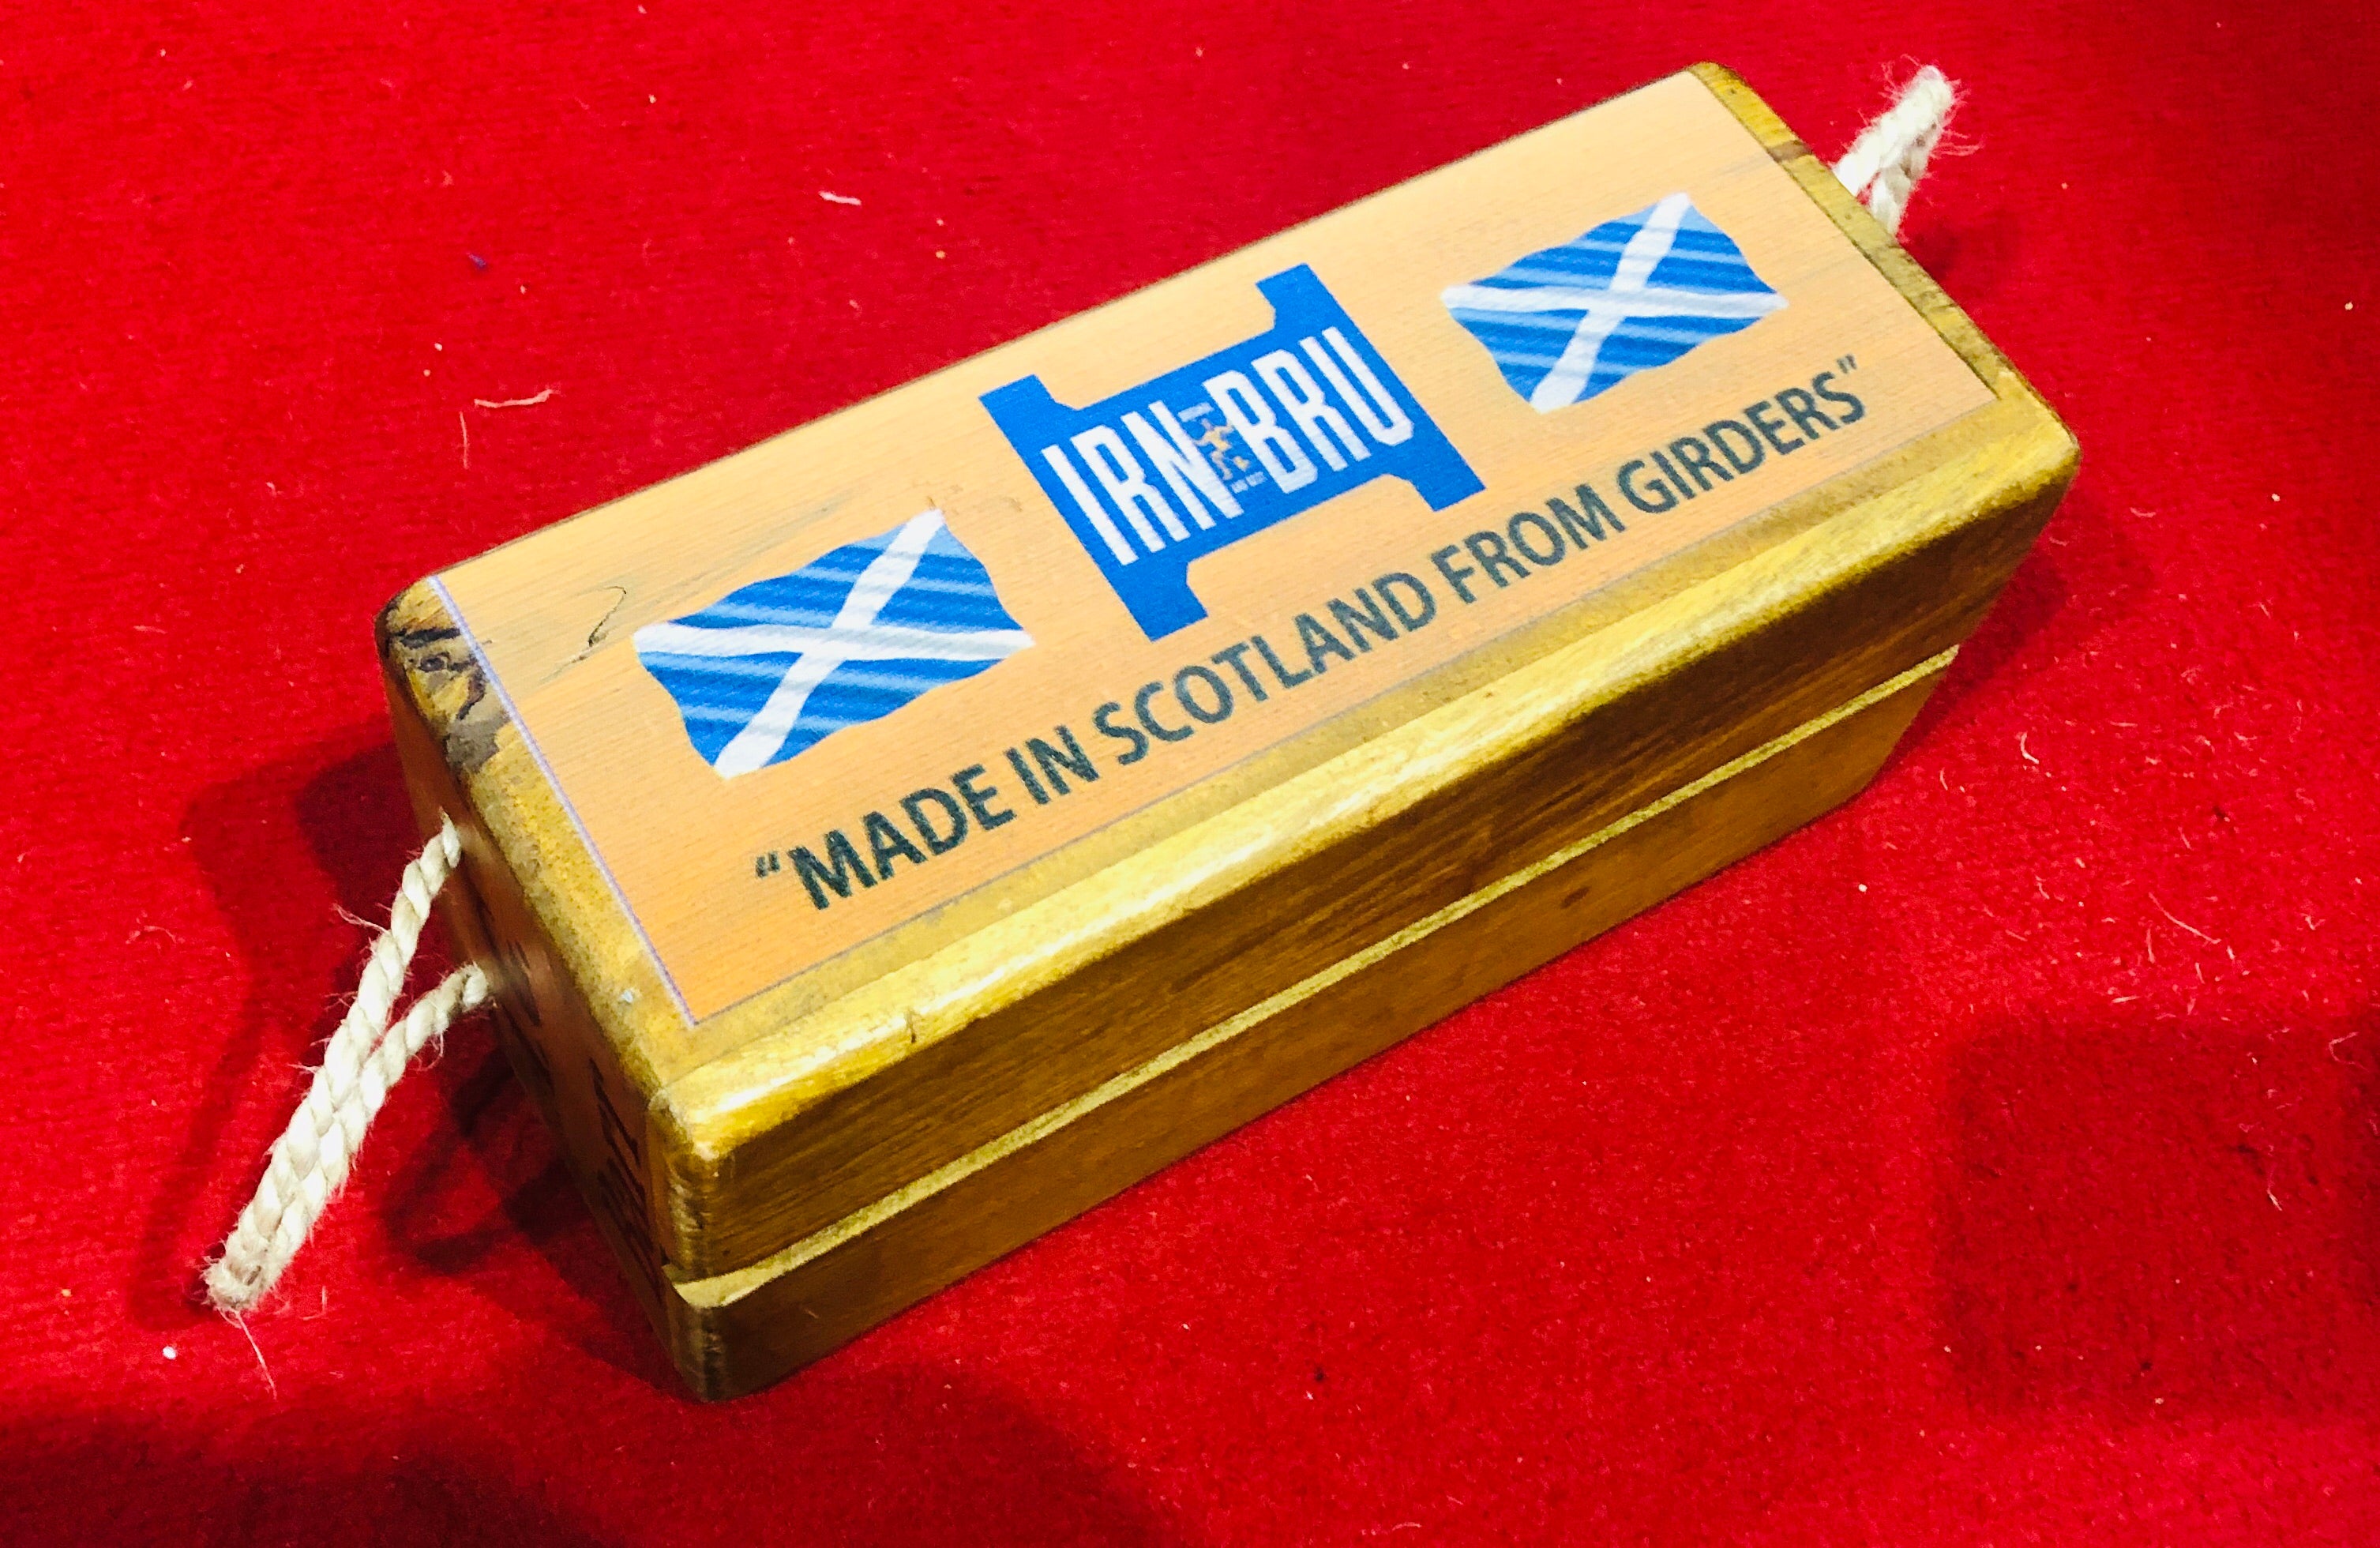 Iron bru Scotland girders wooden box - SALE